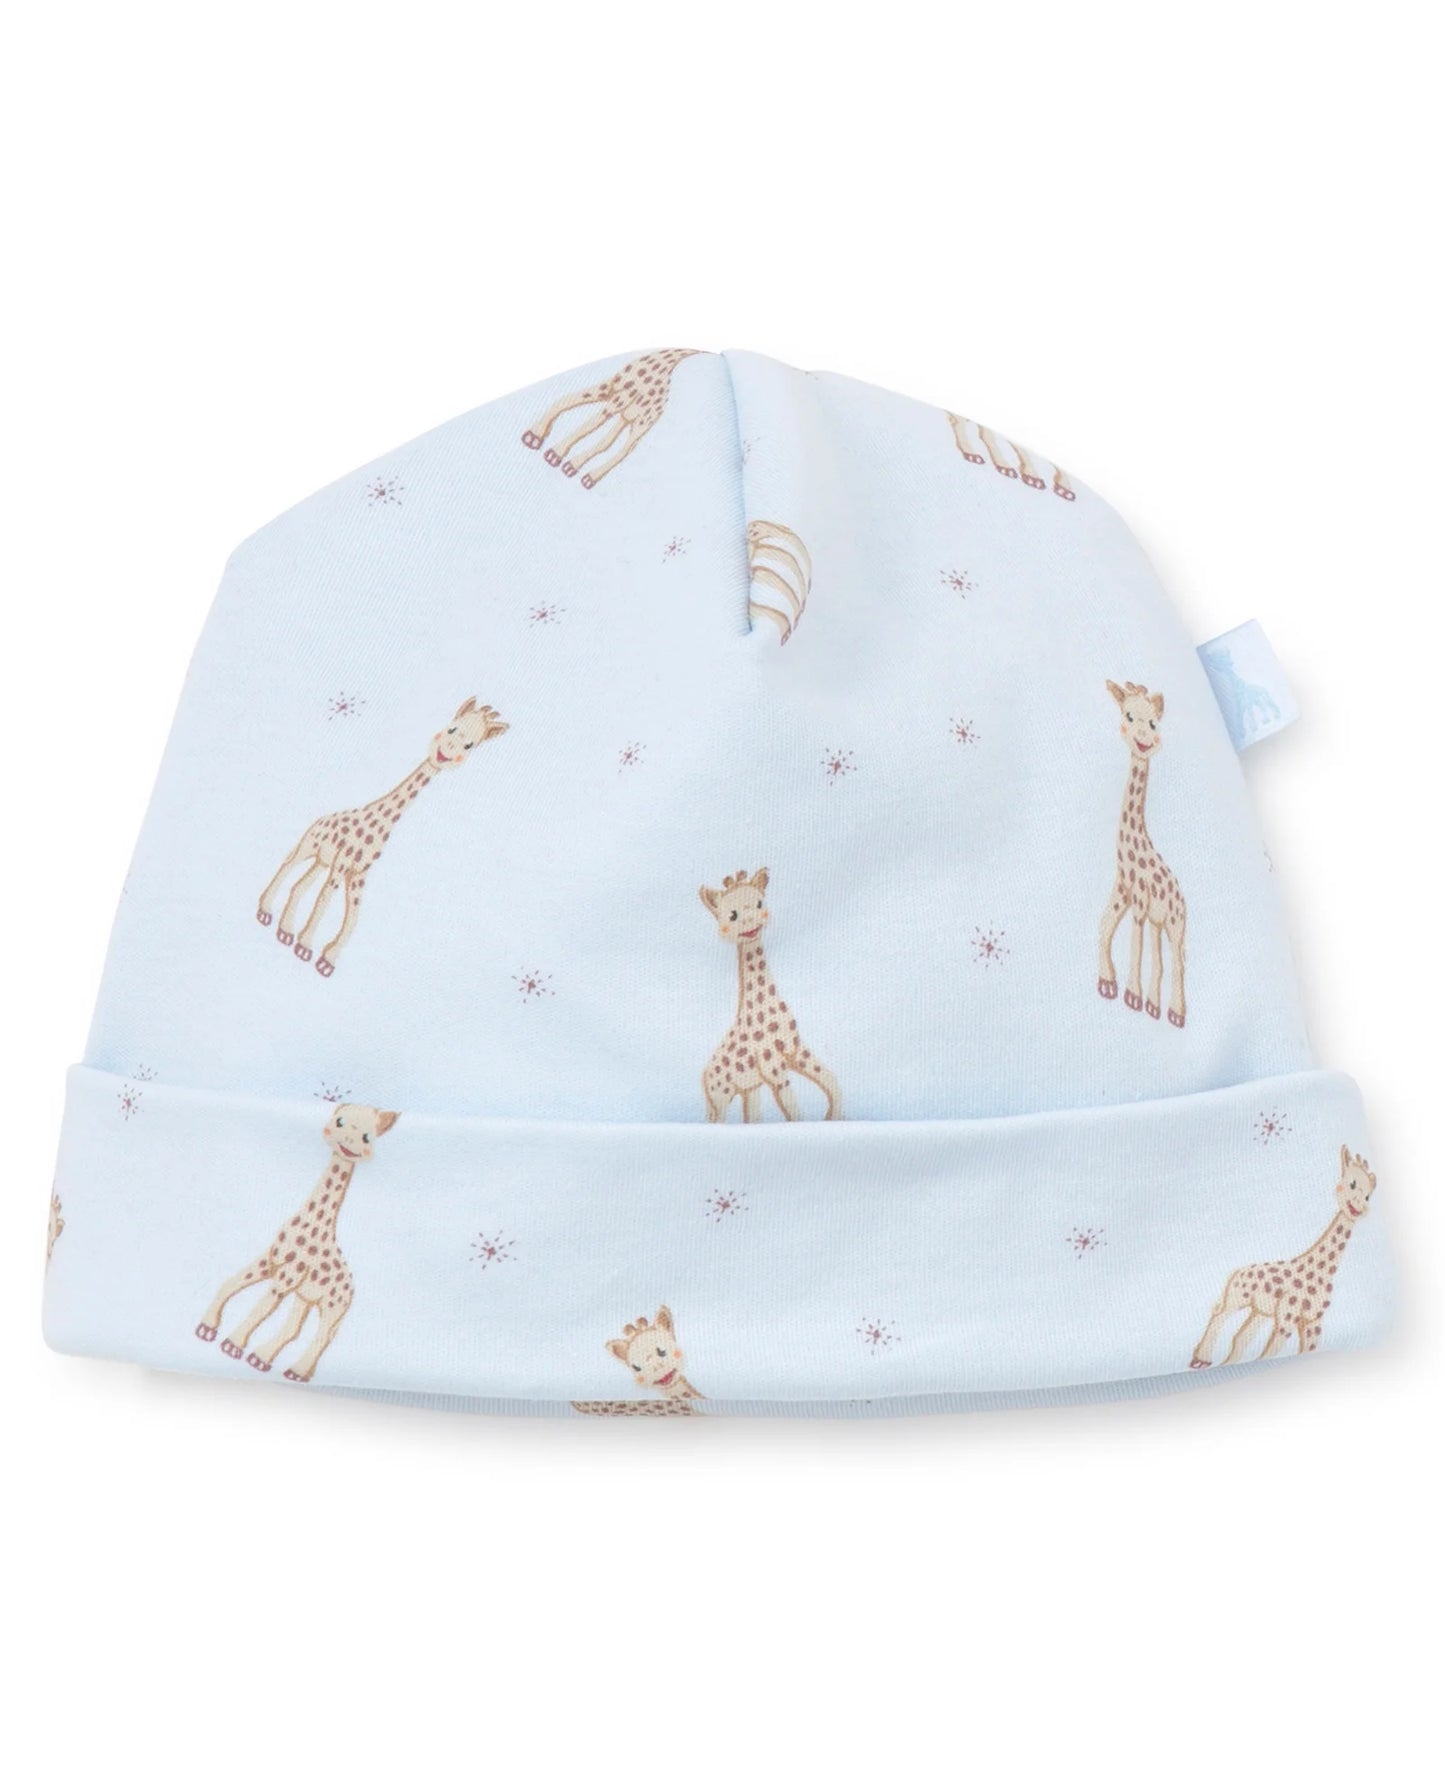 Sophie la girafe Print Hat